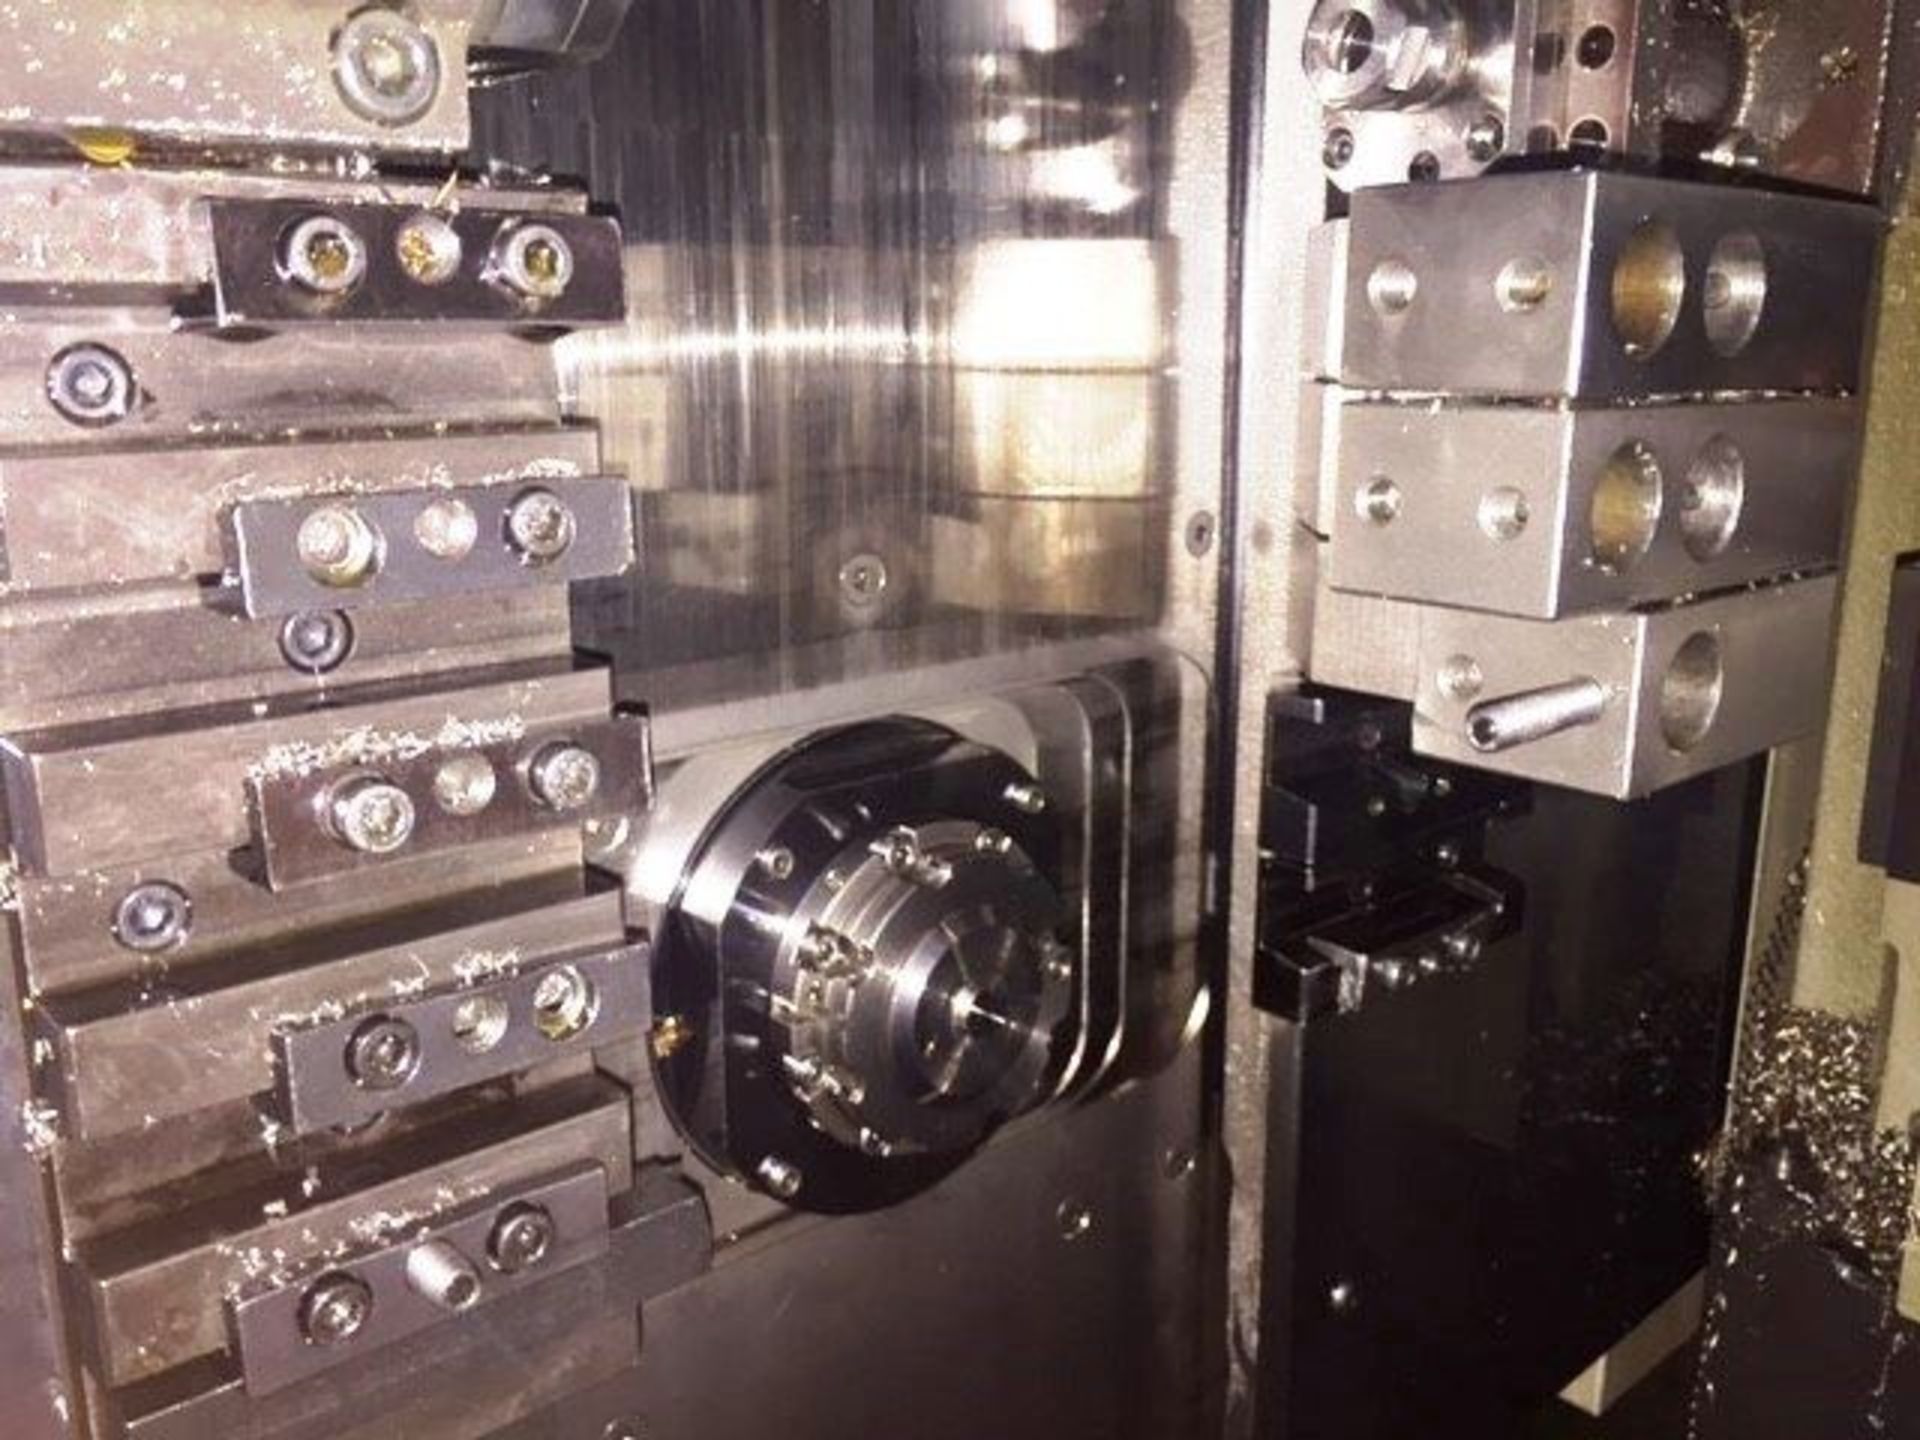 32MM TSUGAMI SS32 SUPER SWISSTURN SLIDING HEADSTOCK CNC AUTOMATIC LATHE, S/N 183, NEW 2010 Working - Image 5 of 15